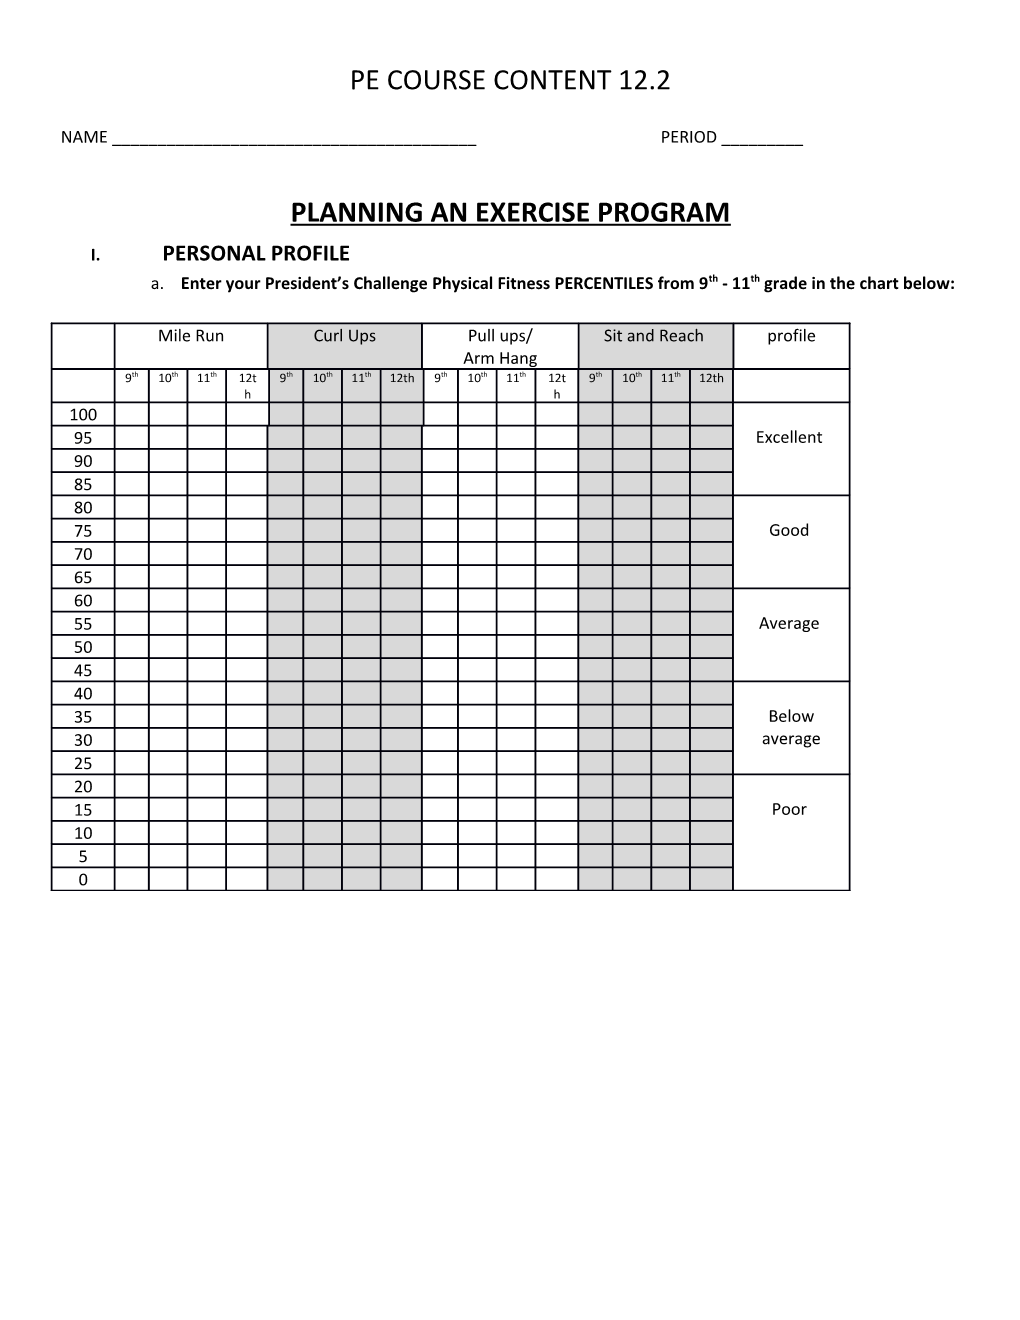 Planning an Exercise Program